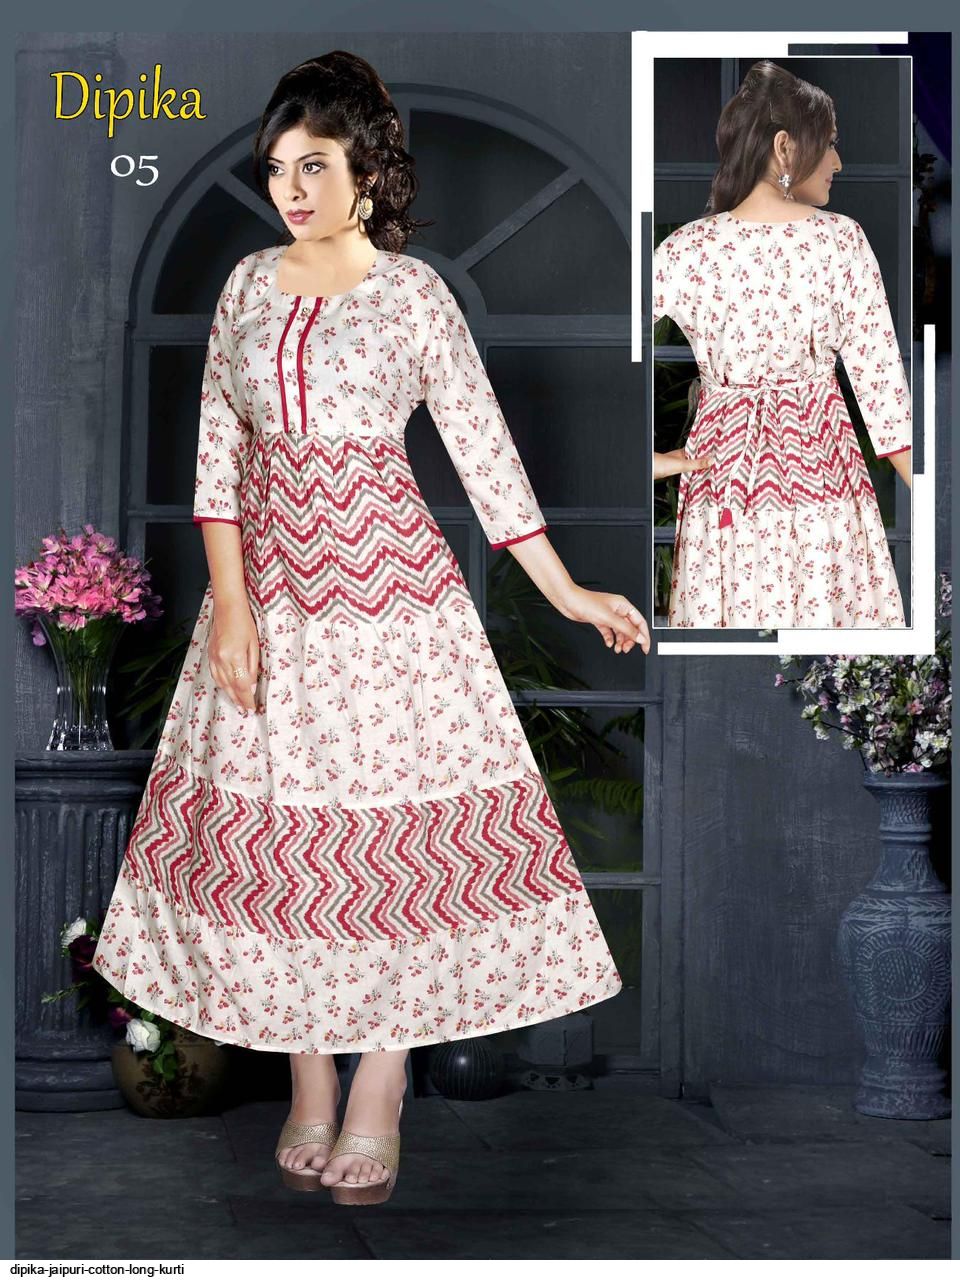 Jaipur Cotton Maxi (XL/Pink/Jaipur Cotton/Frock Style With Puff Sleeve/47)  - kodhainighties